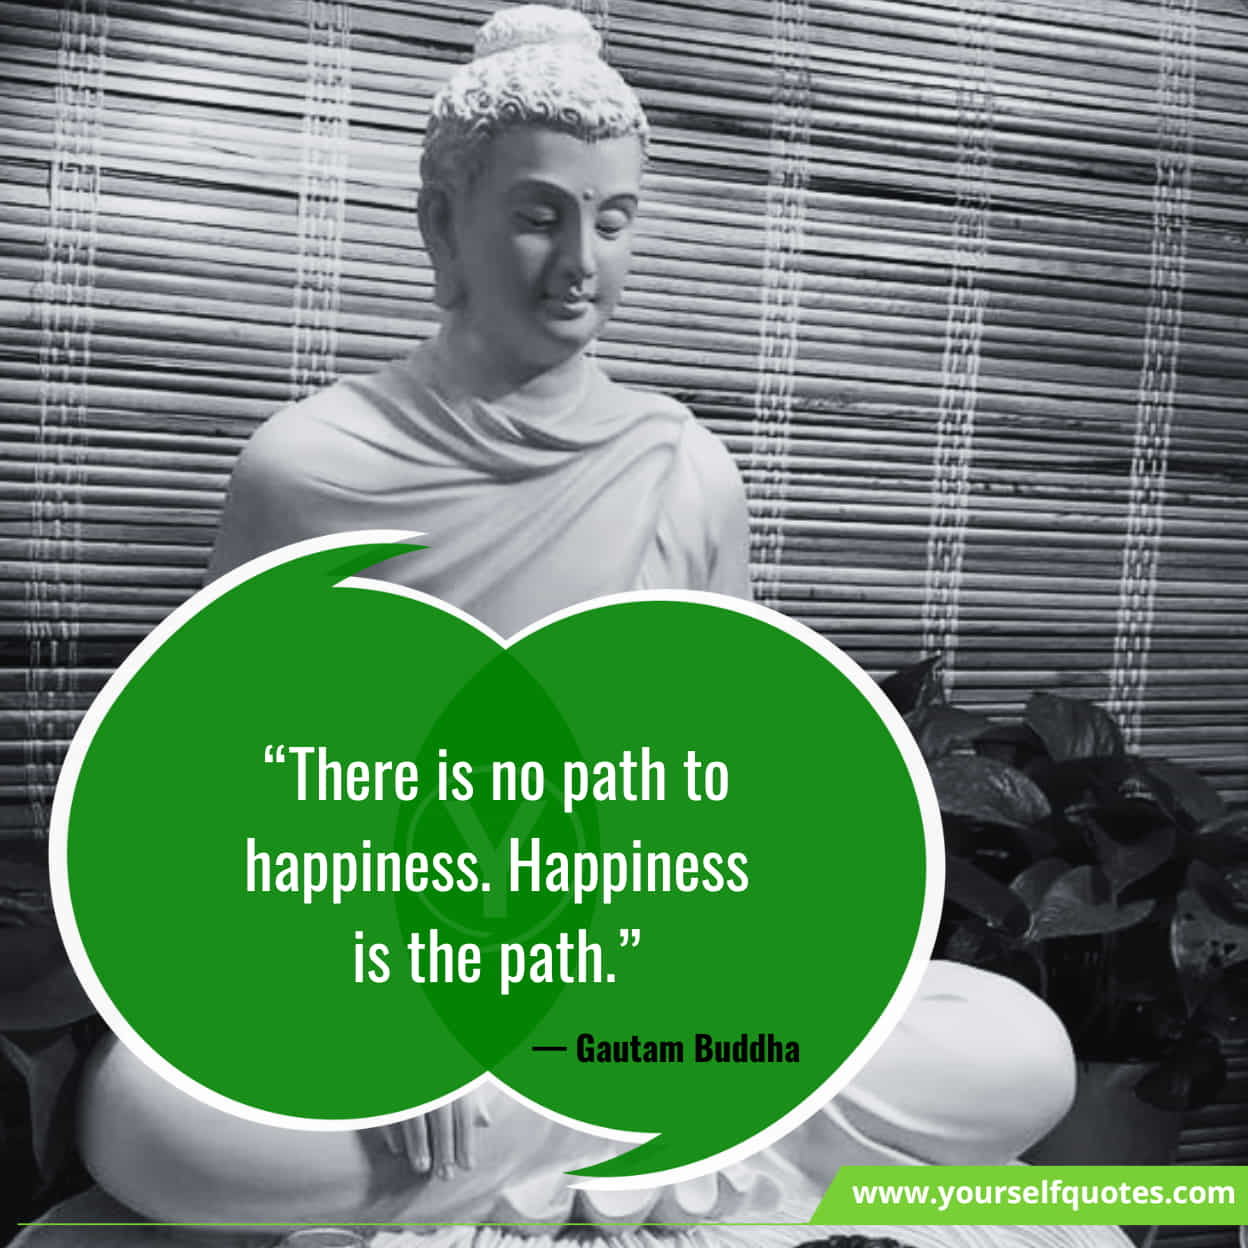 Gautam Buddha Quotes For Happiness